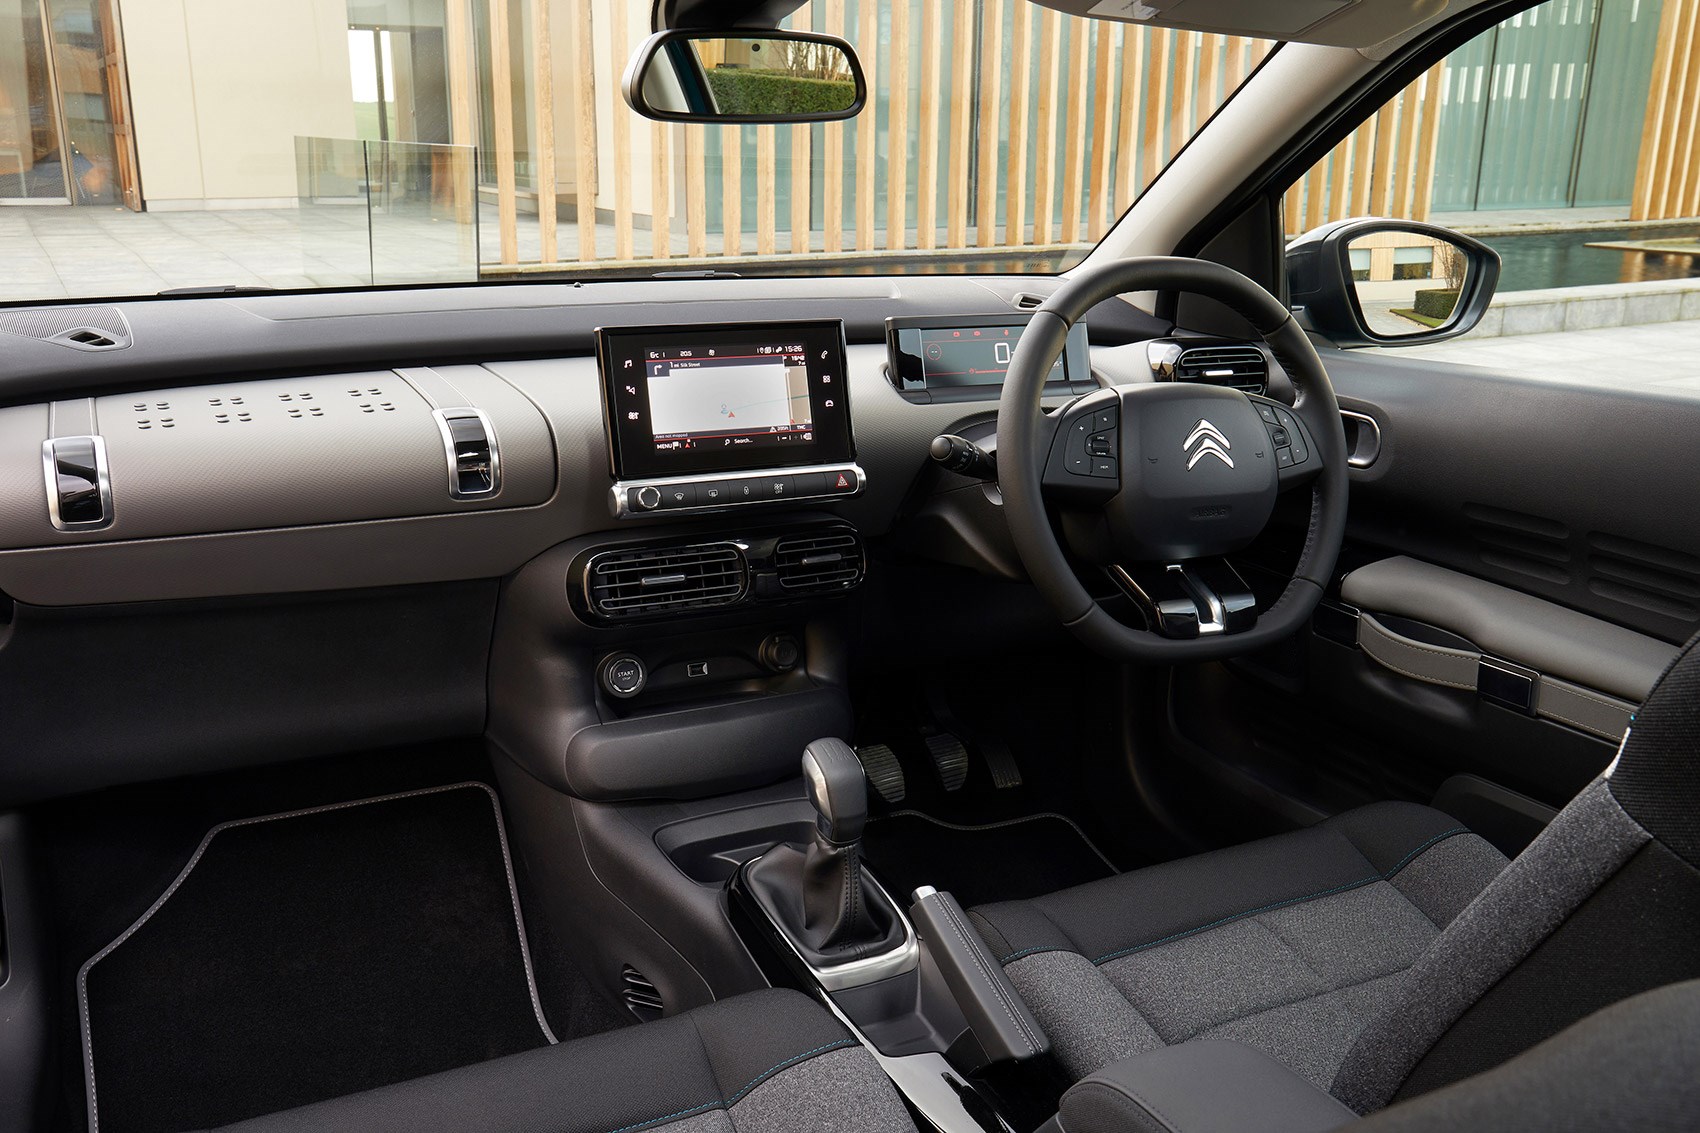 Facelifted 2018 Citroen C4 Cactus interior and cabin